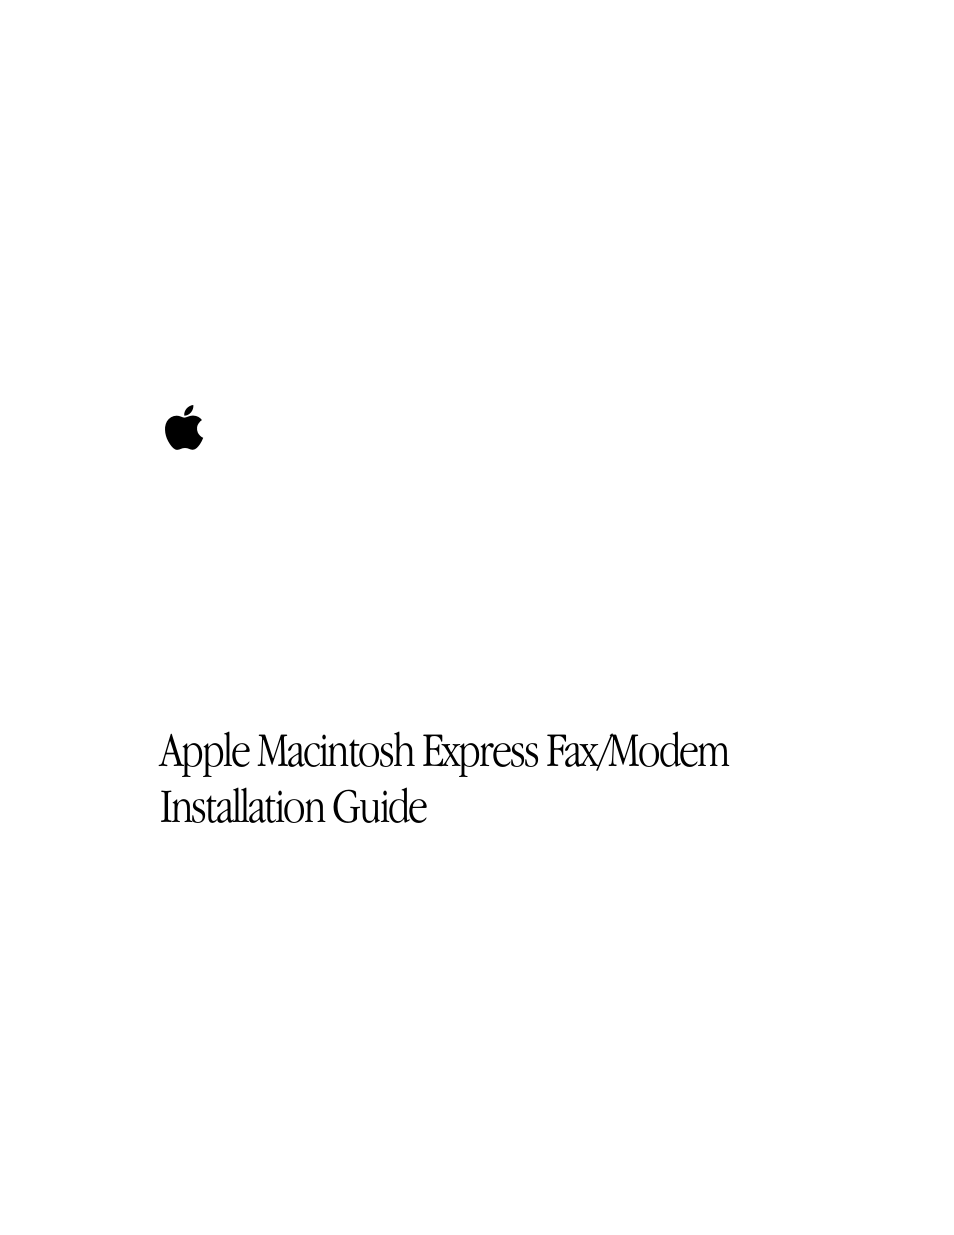 Macintosh Express Fax/Modem